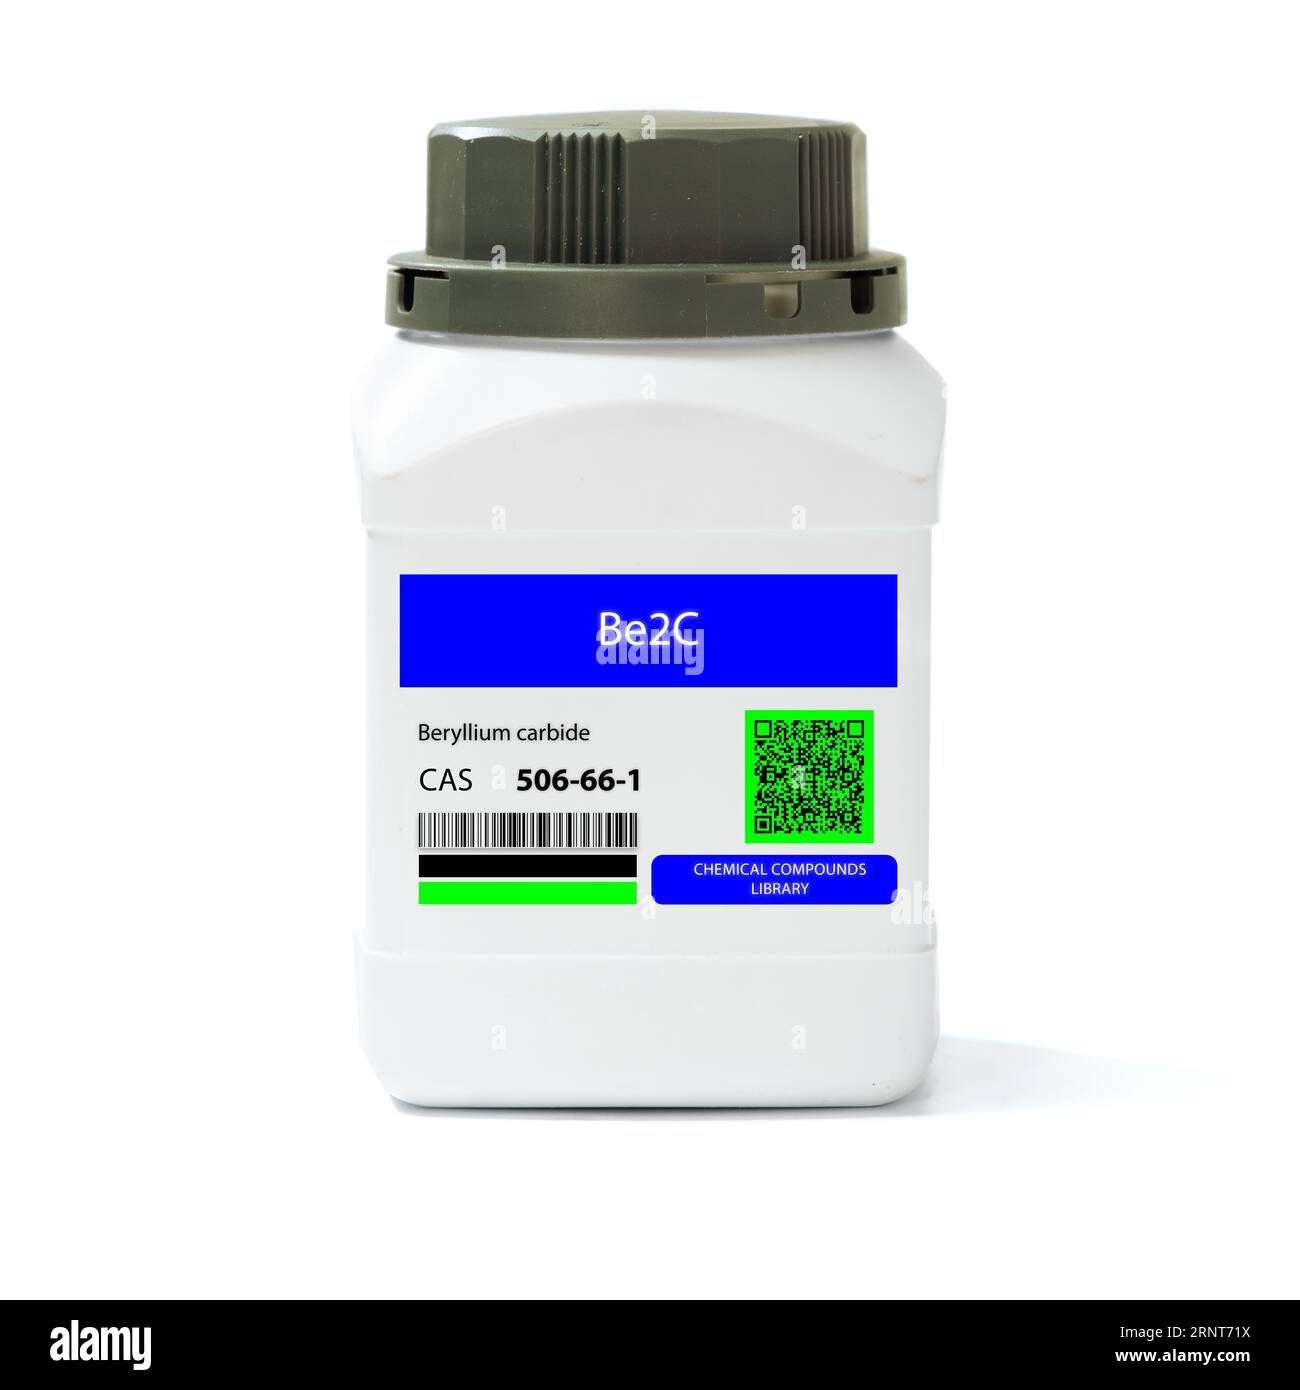 Be2C - Beryllium Carbide. Chemical compound. CAS number  506-66-1 Stock Photo